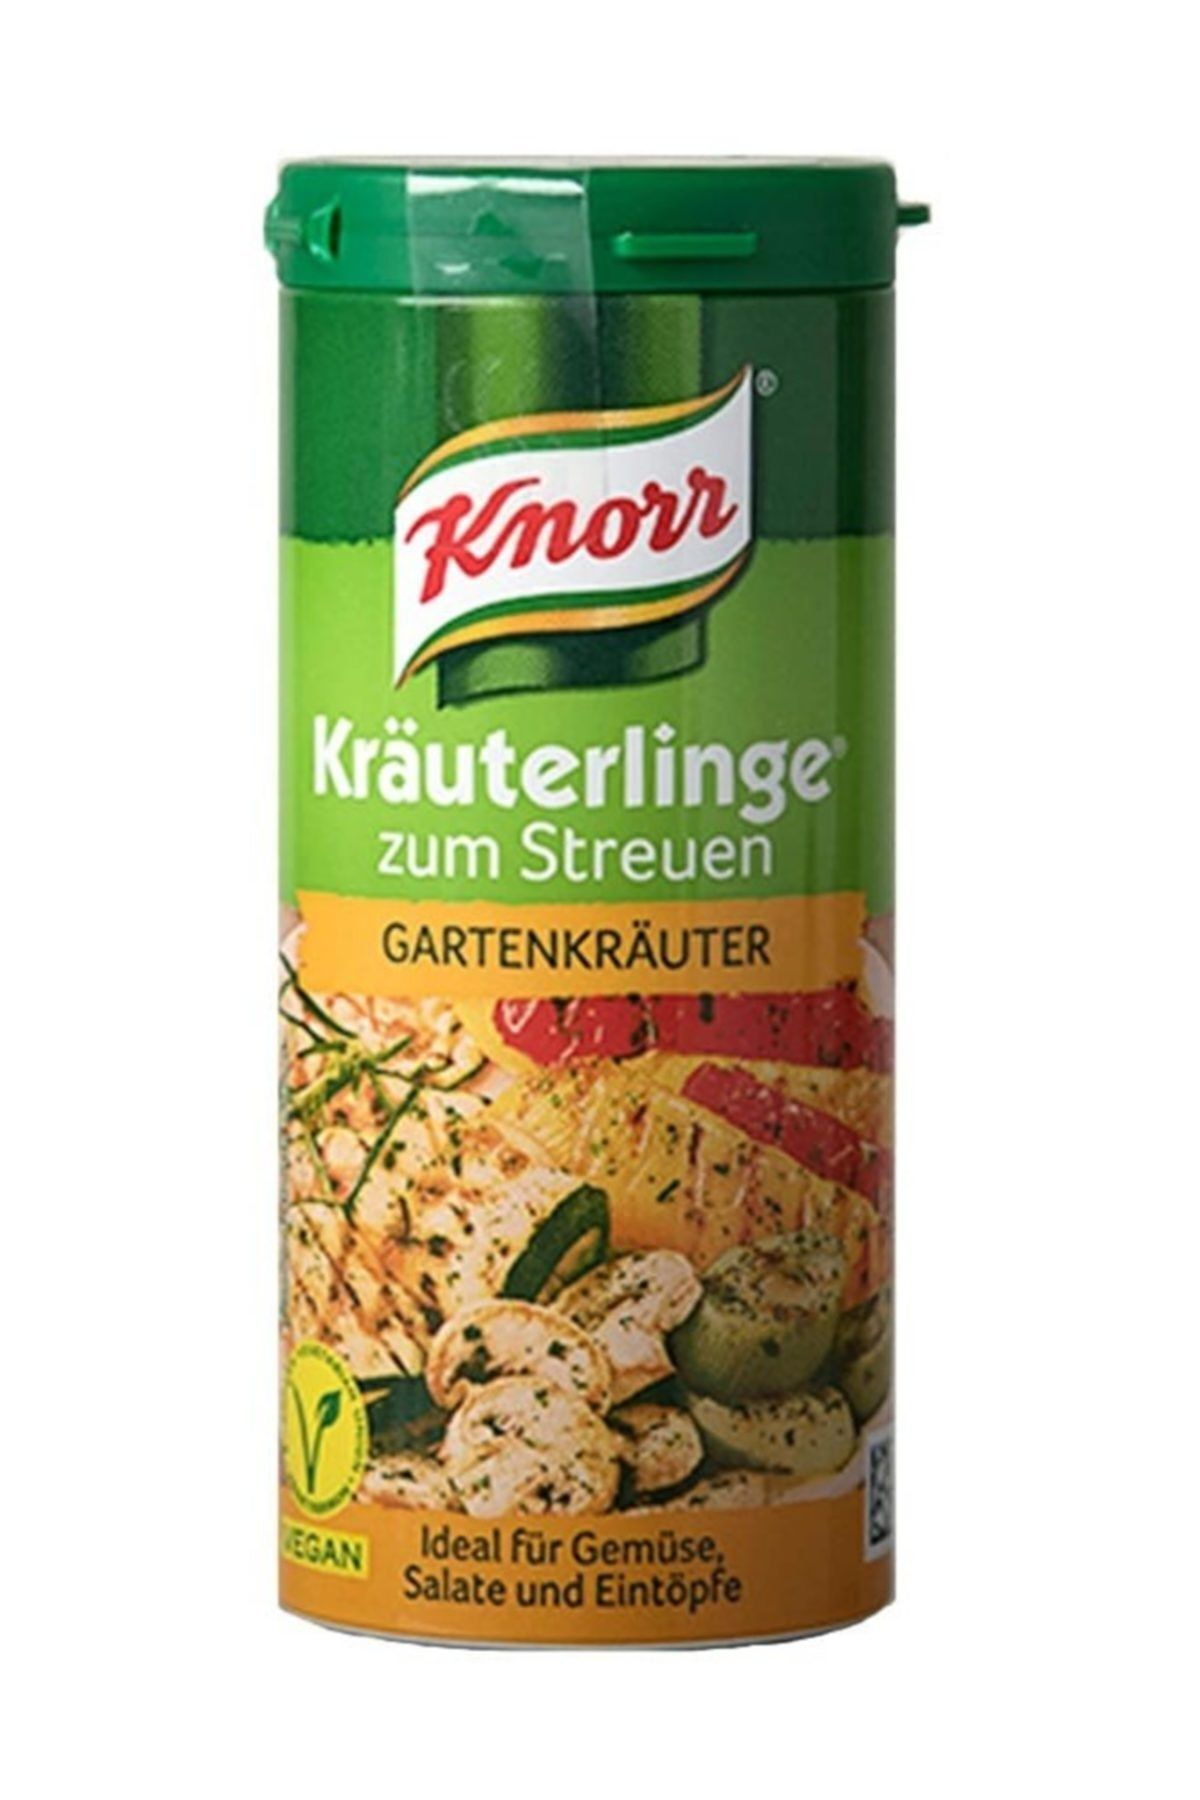 Knorr Krautrlinge Zumstreun 60gr Baharat